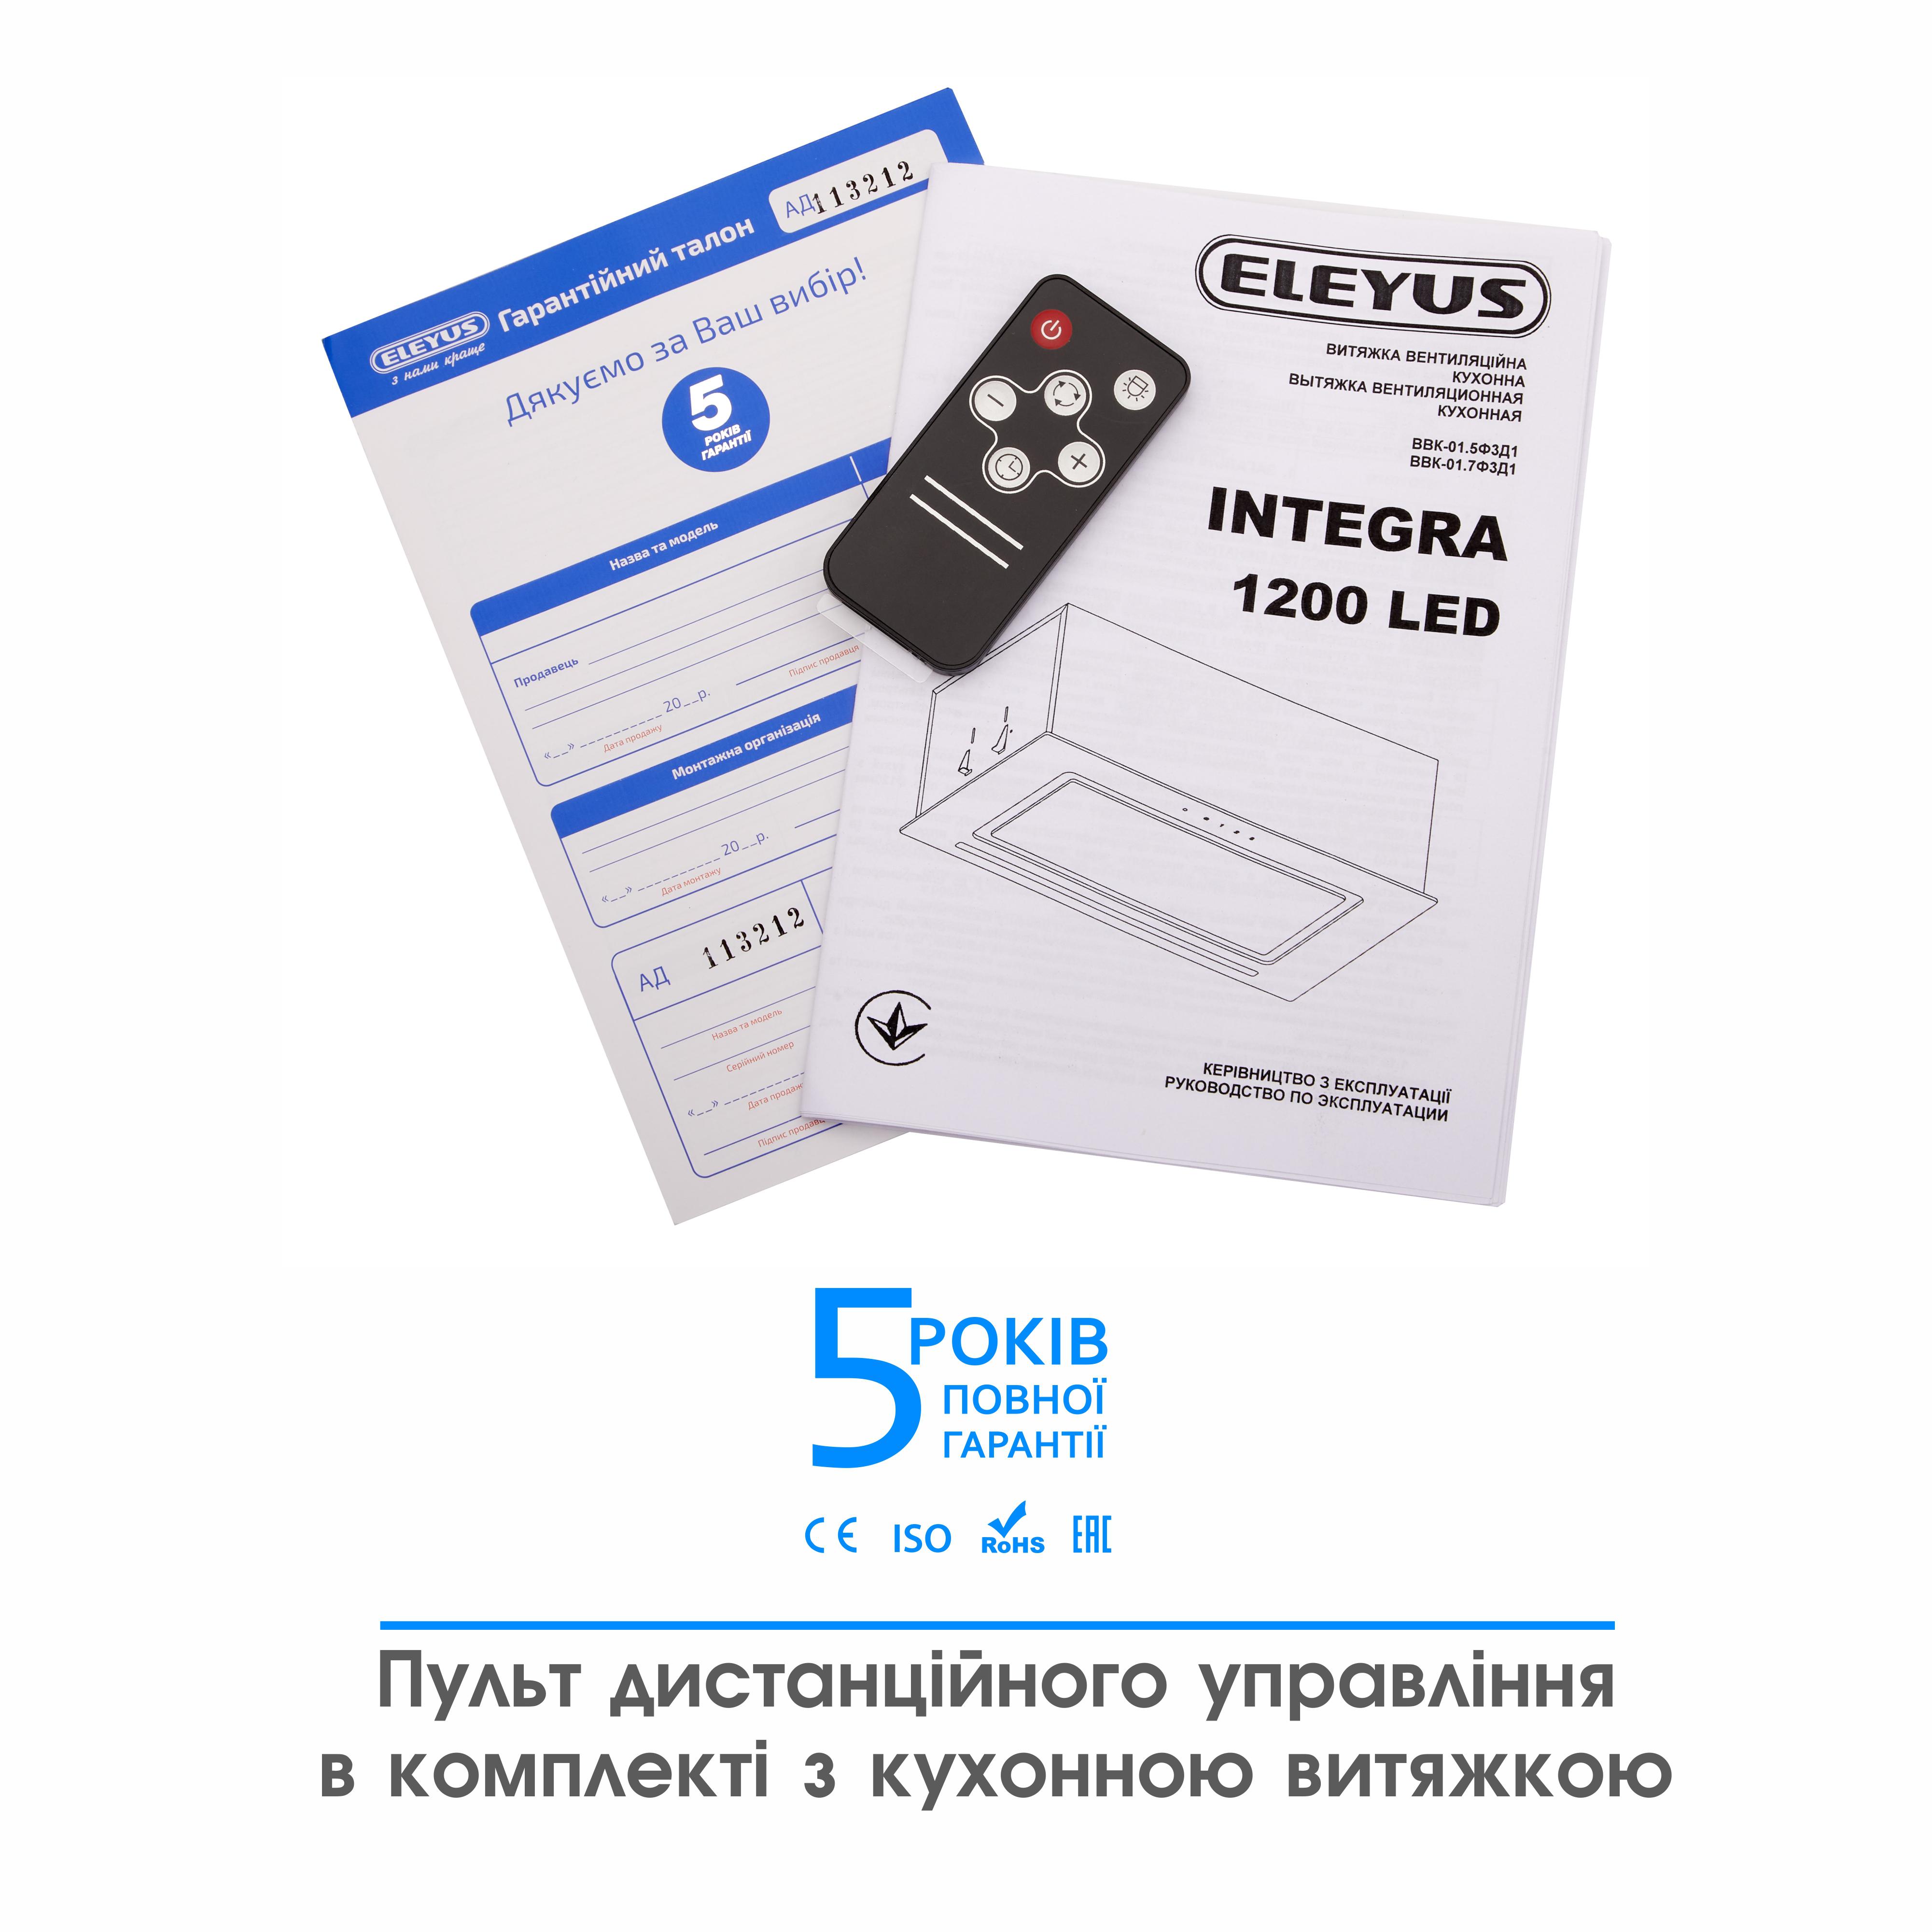 картка товару Eleyus Integra 1200 LED 52 BL - фото 16